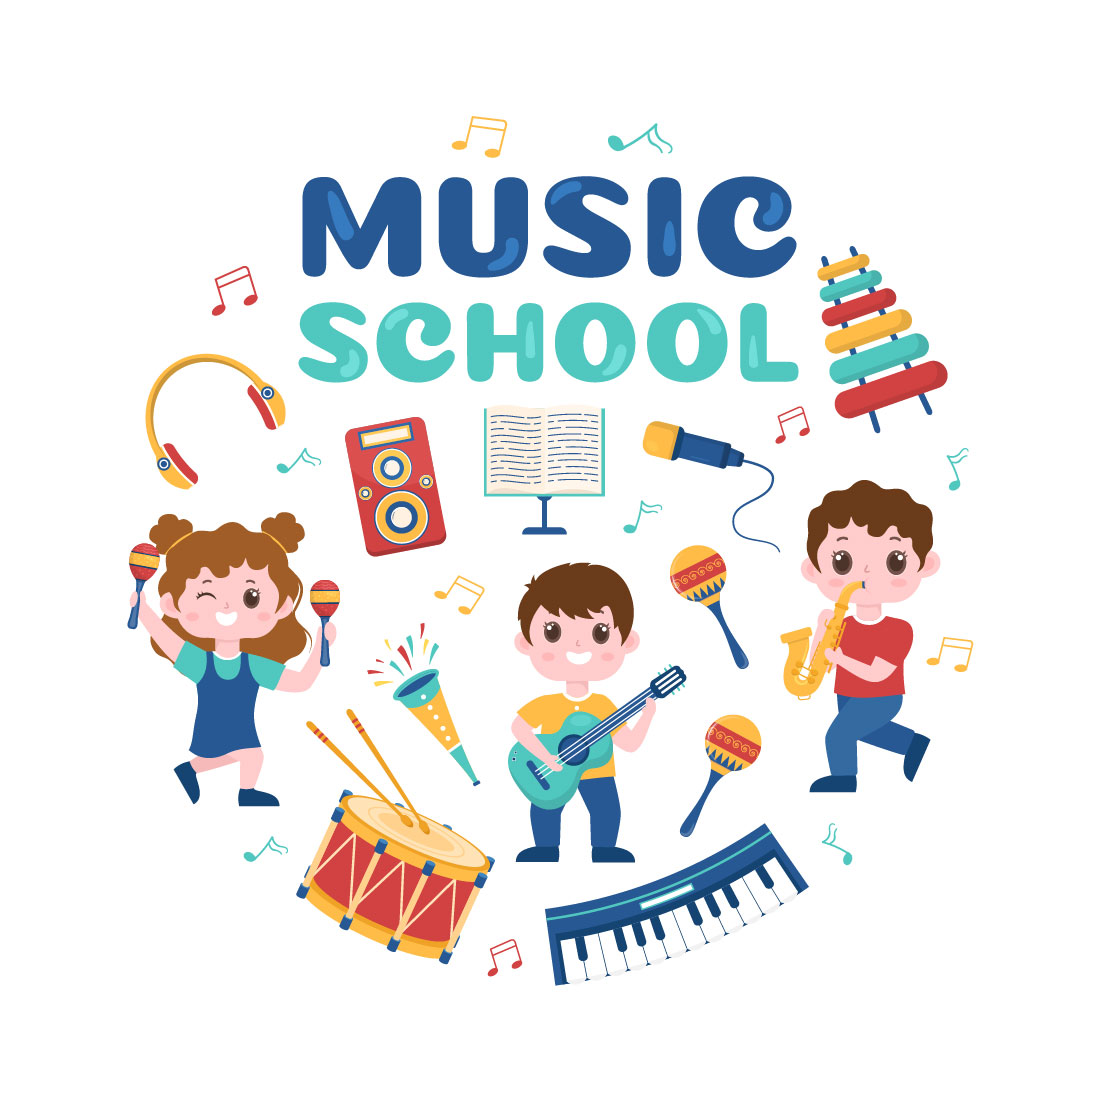 9 Music School Illustration cover image.